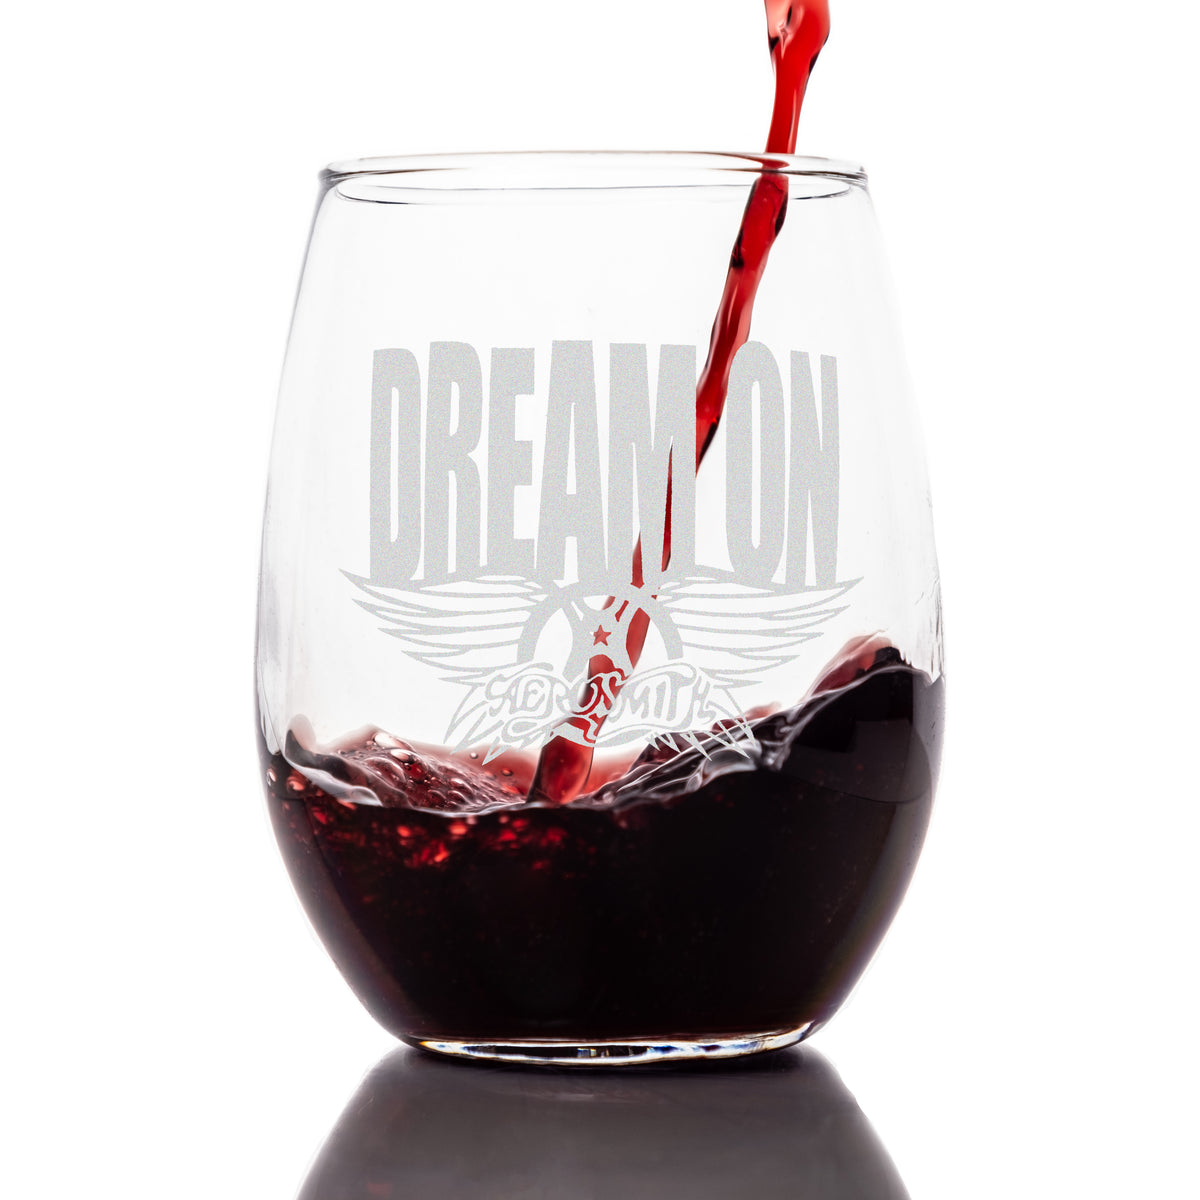 AEROSMITH: Stemless wine glass - Dream On